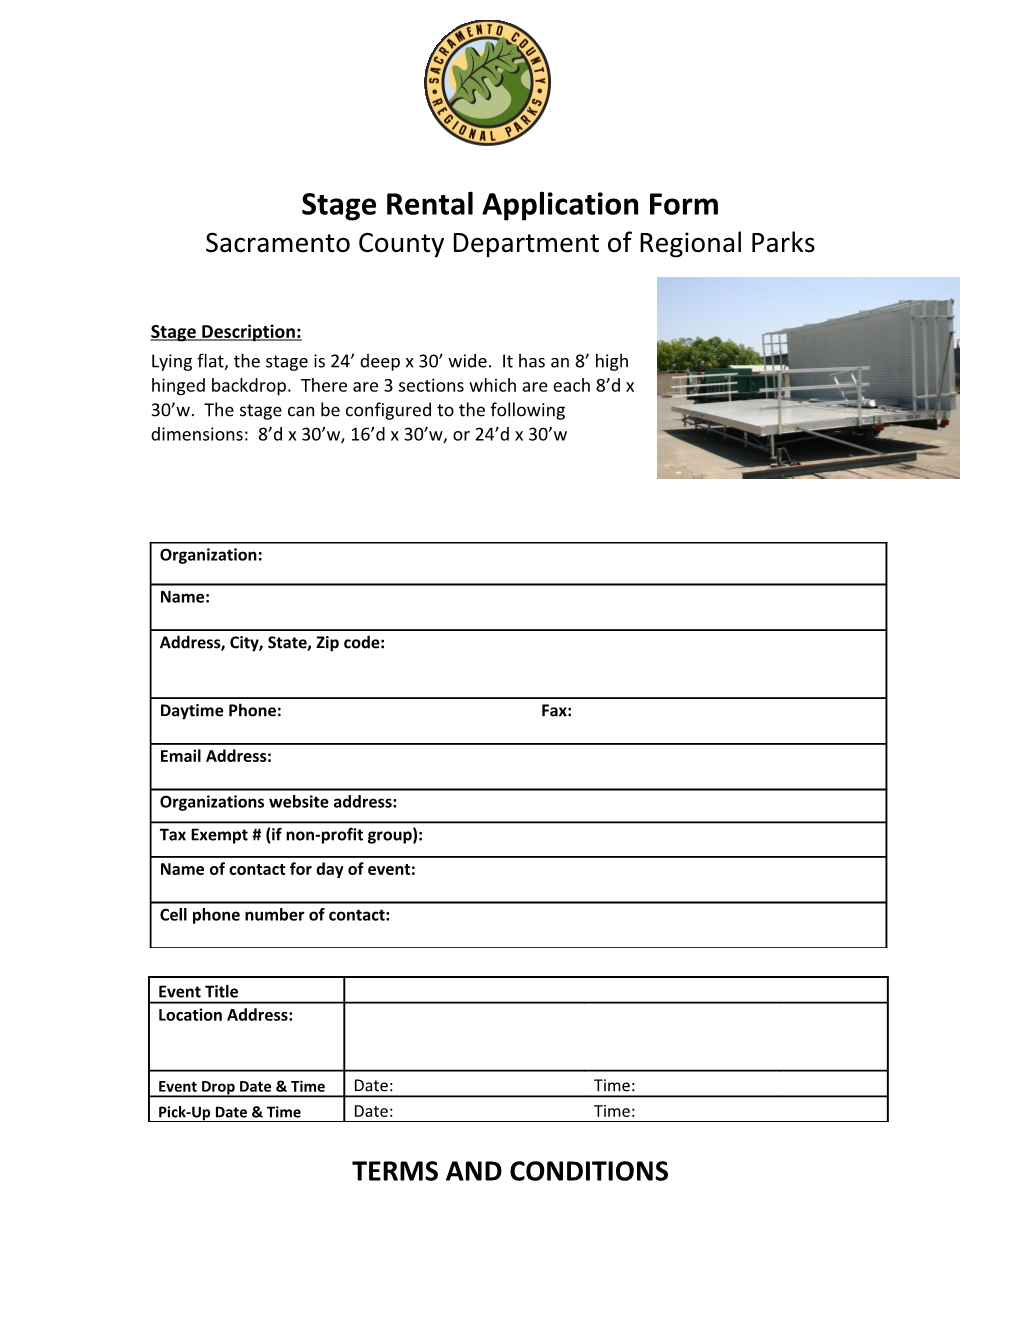 Stage Rental Application Form